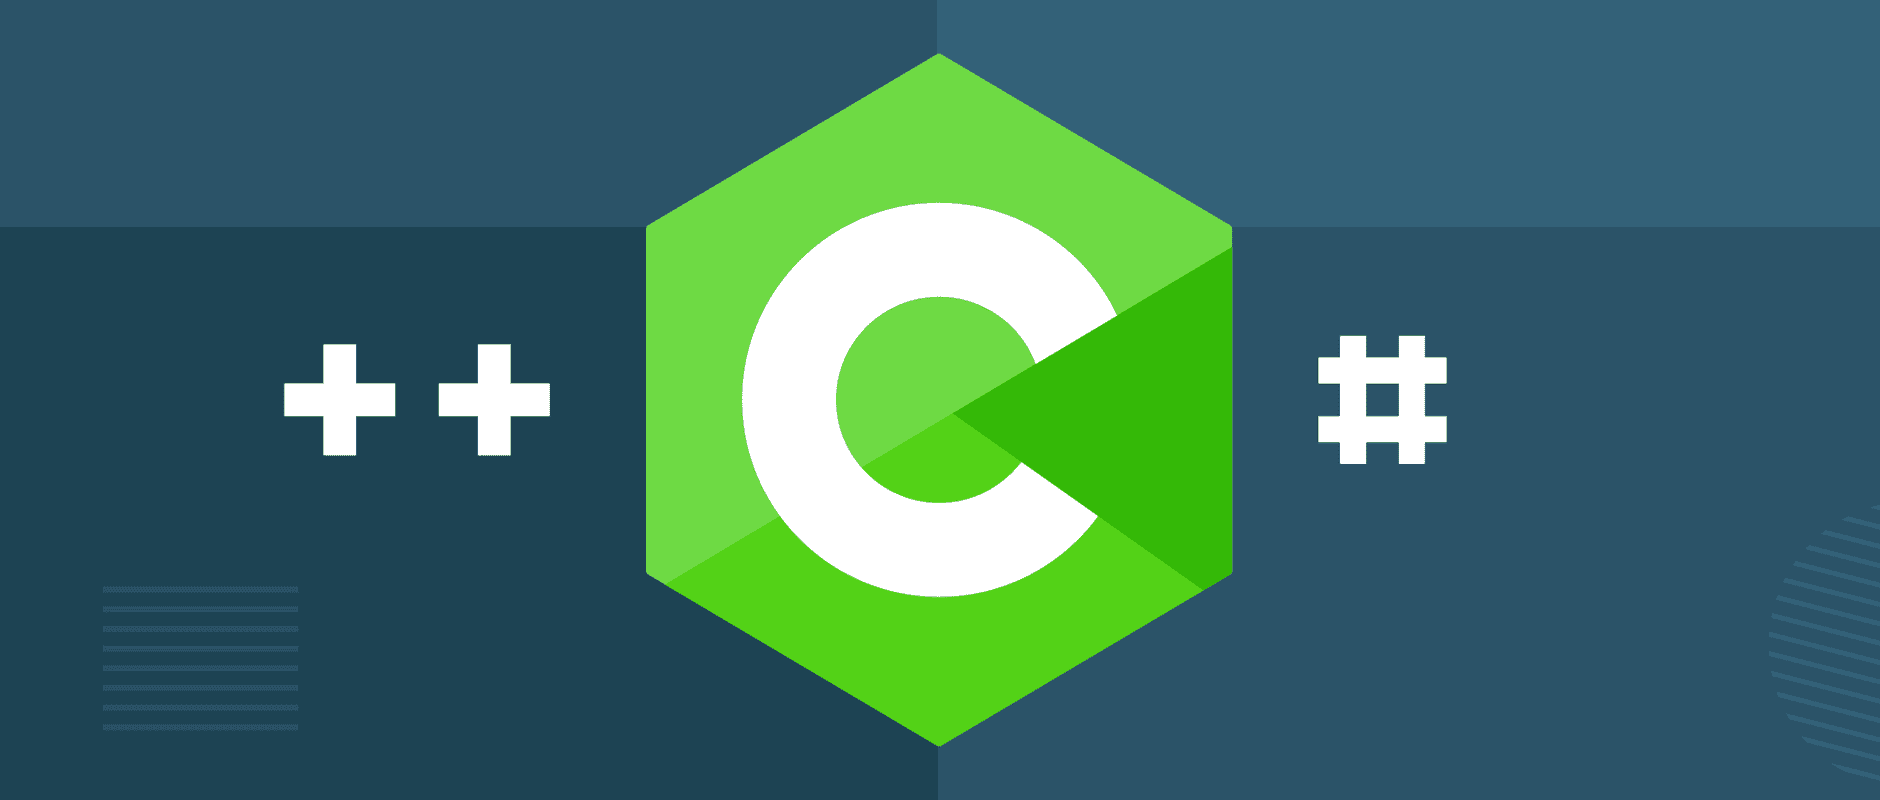 C# VS C++